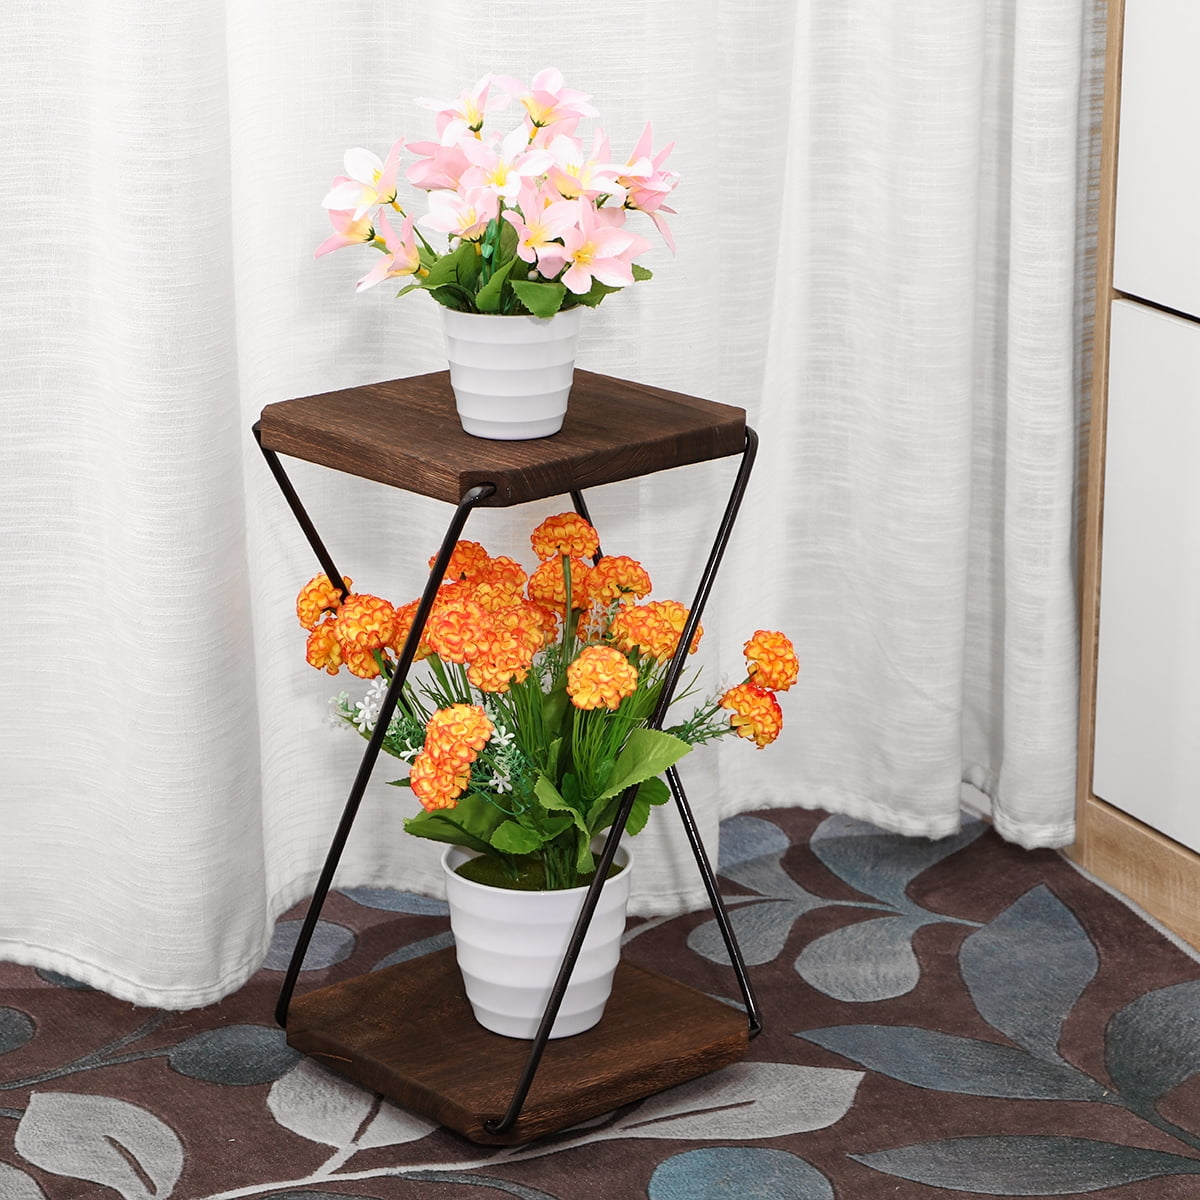 Details about   LUNA Plant Pots Cover Holder  Flowerpot Garden Flower Planters Indoor Stand 